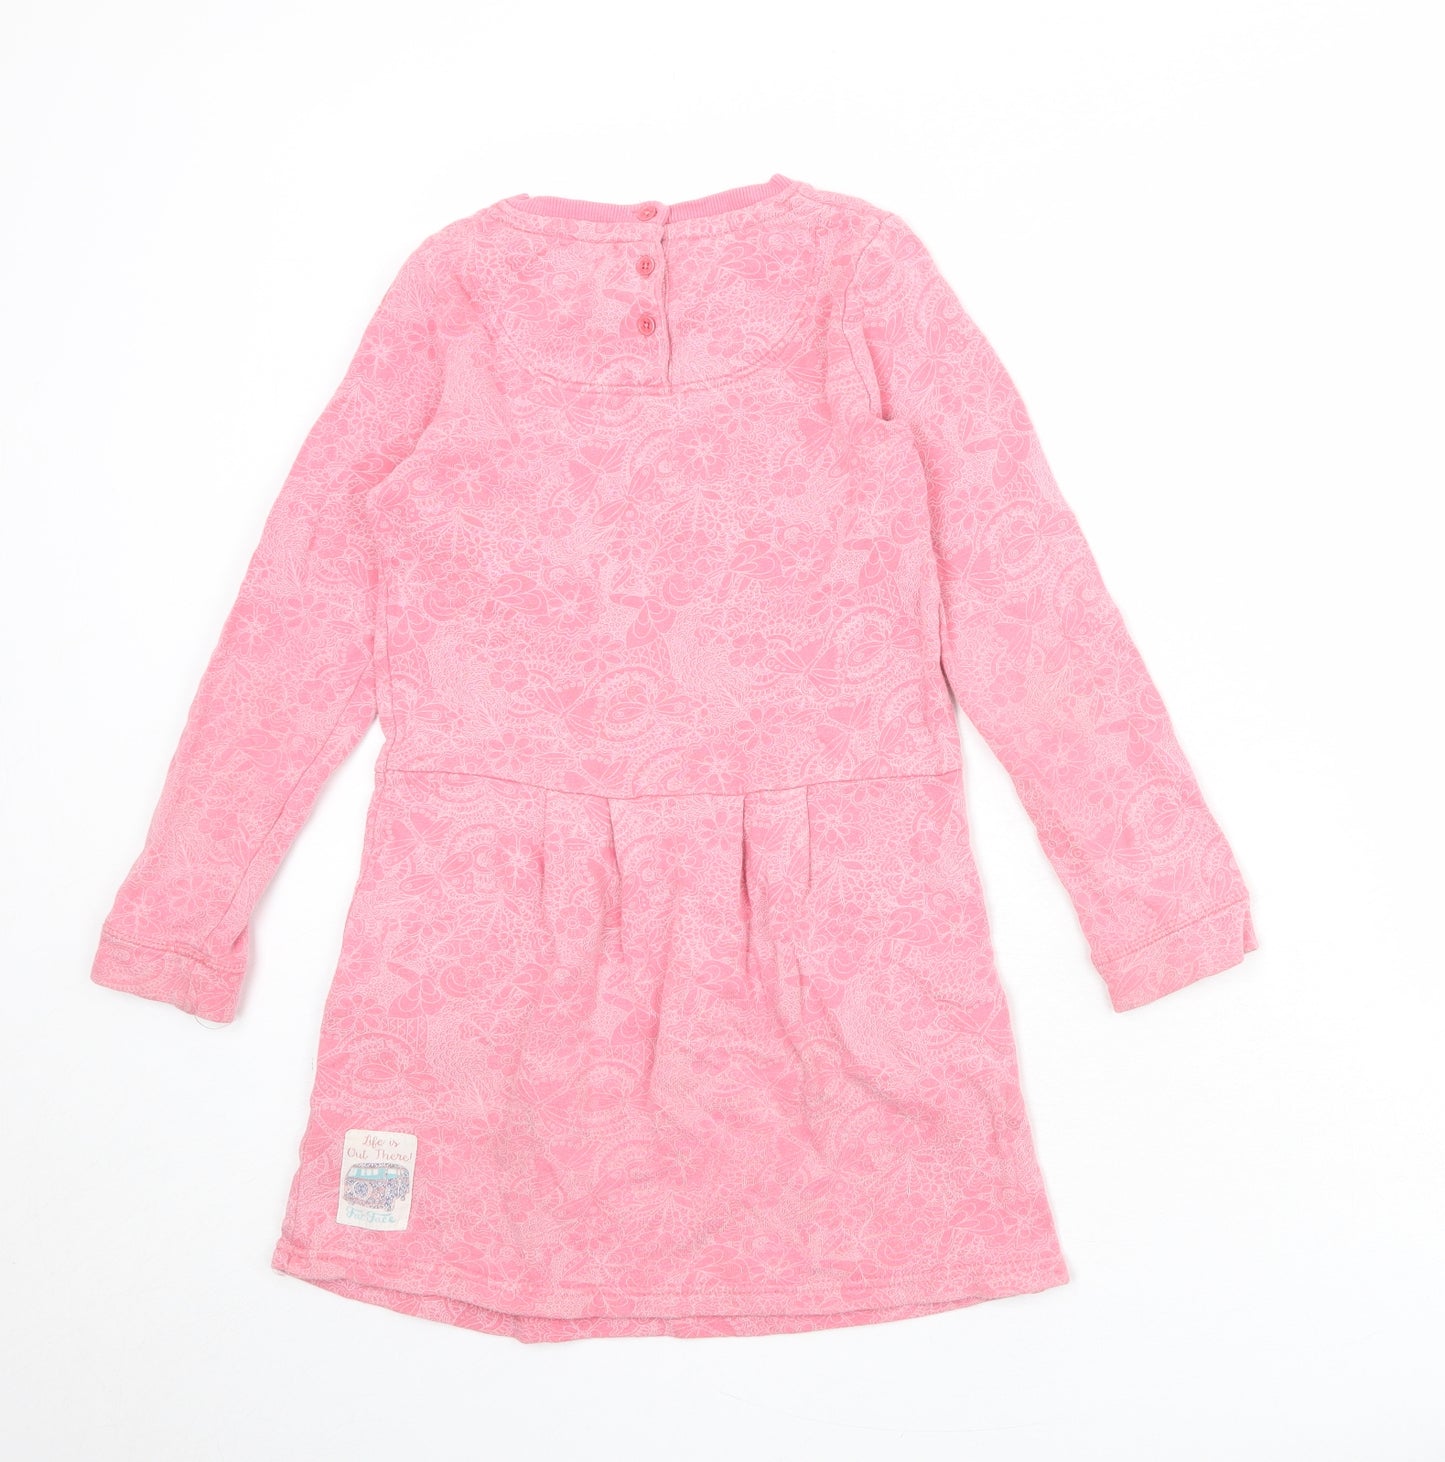 Fat Face Girls Pink Geometric 100% Cotton T-Shirt Dress Size 8-9 Years Boat Neck Button